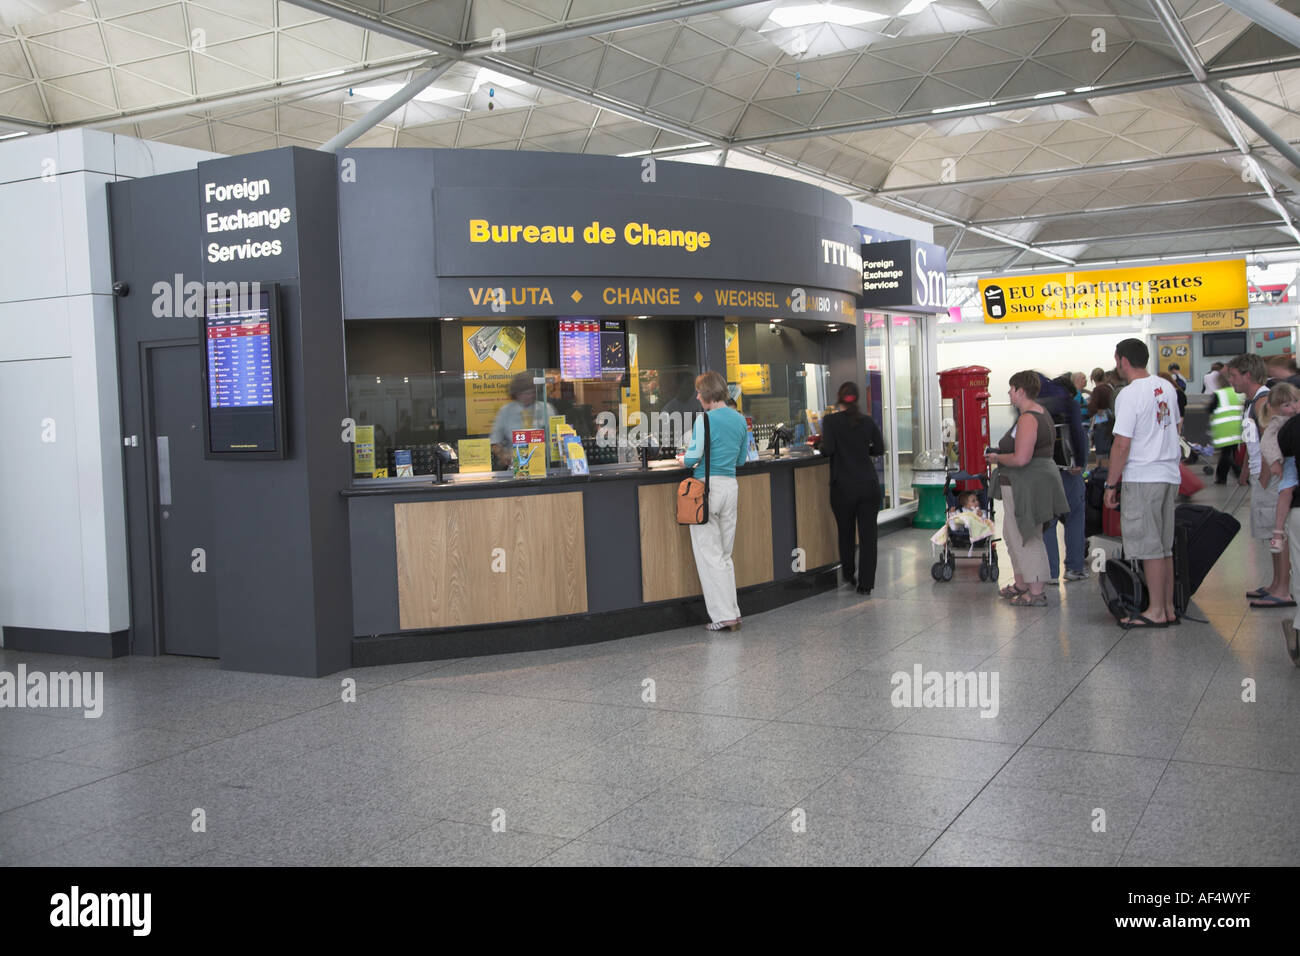 Bureau de change, Stansted airport, England Stock Photo